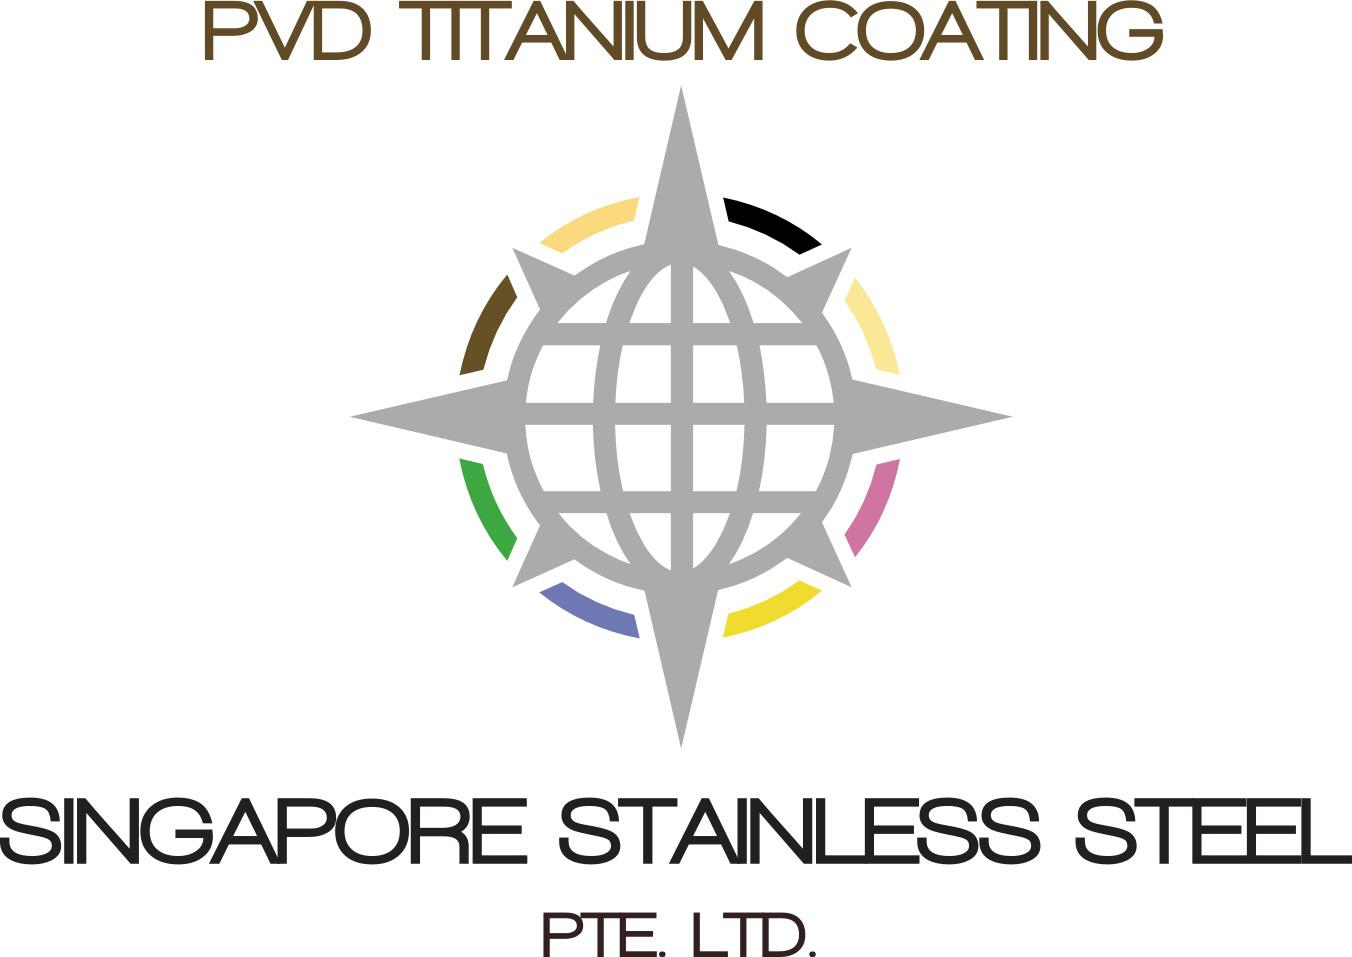 Singapore Stainless Steel Pte. Ltd. logo